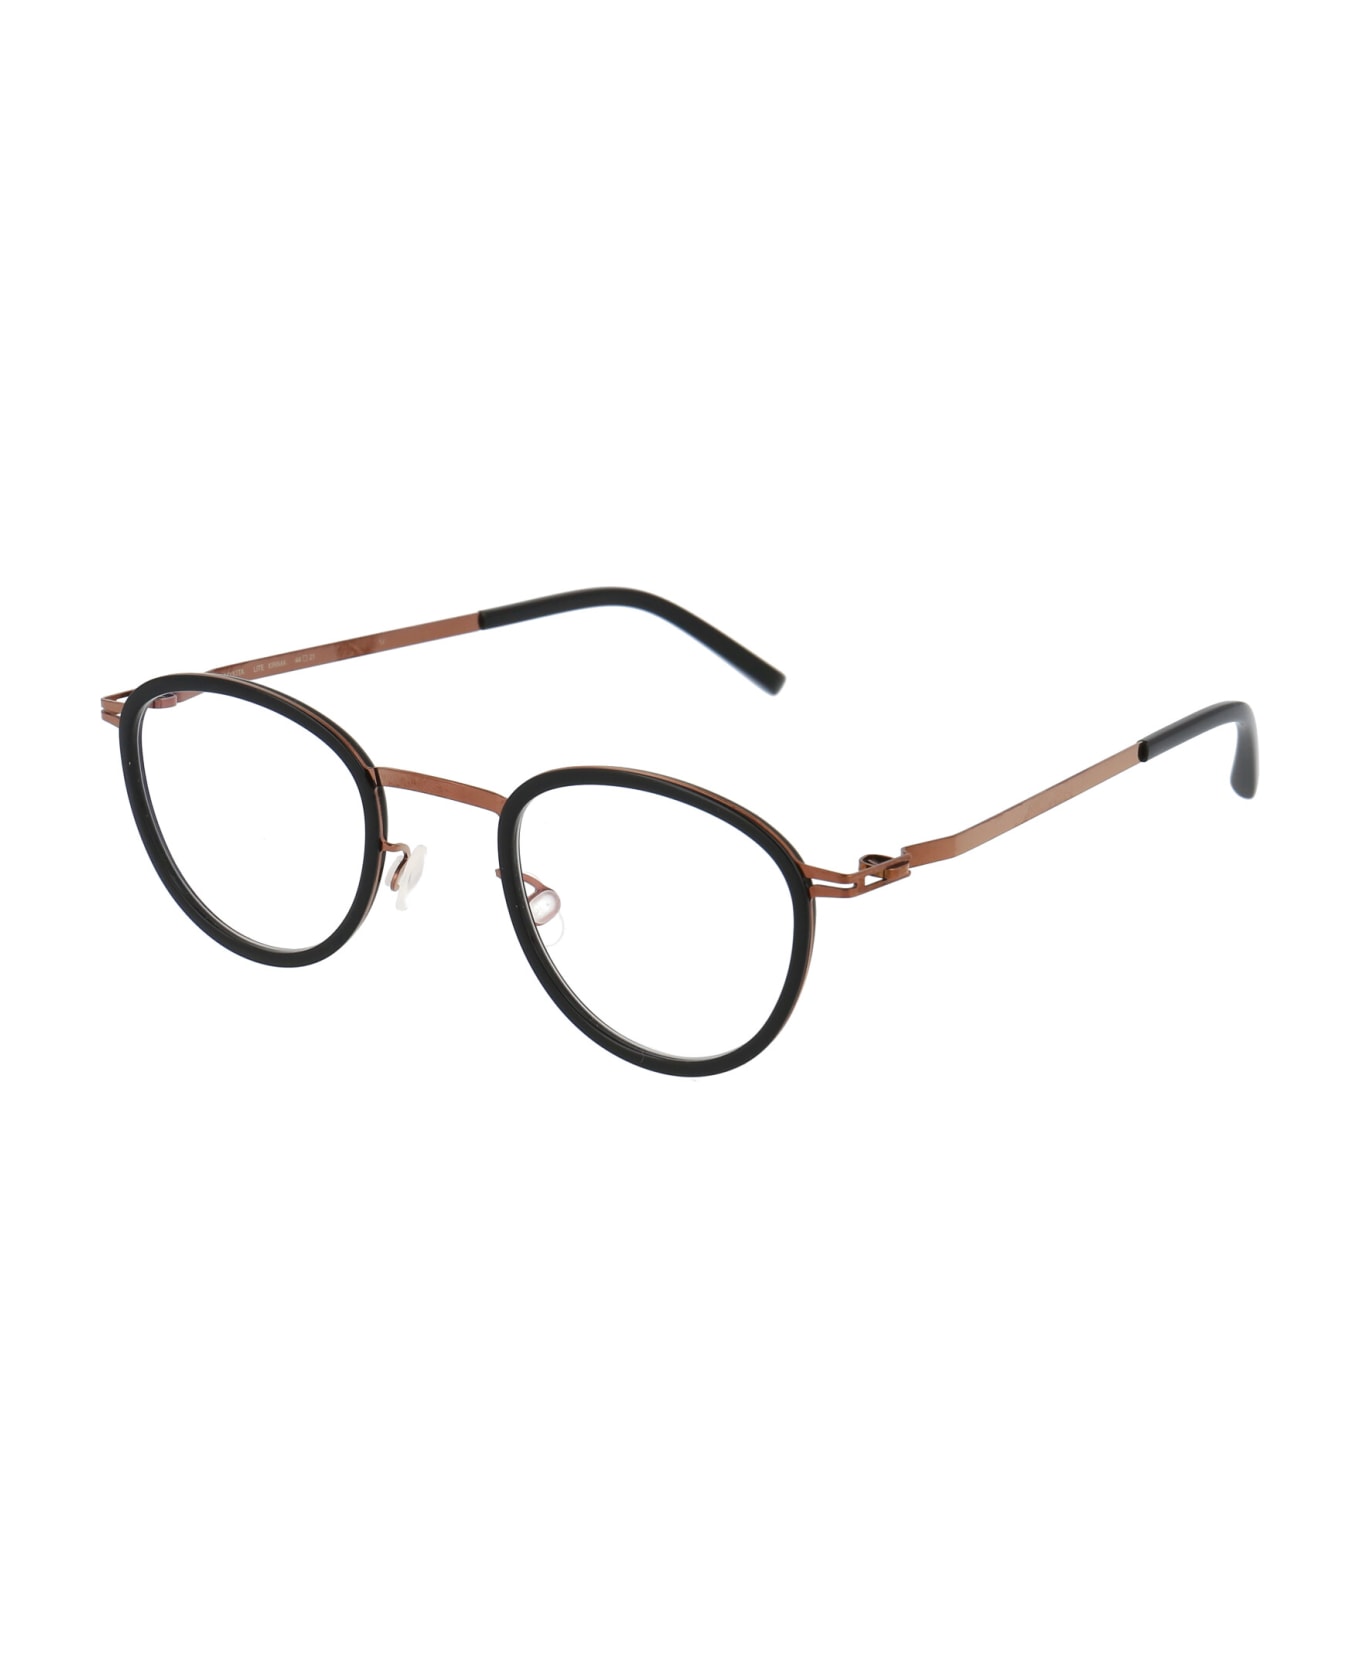 Mykita Kirima Glasses - 818 A37-Shiny Copper/Black Clear アイウェア